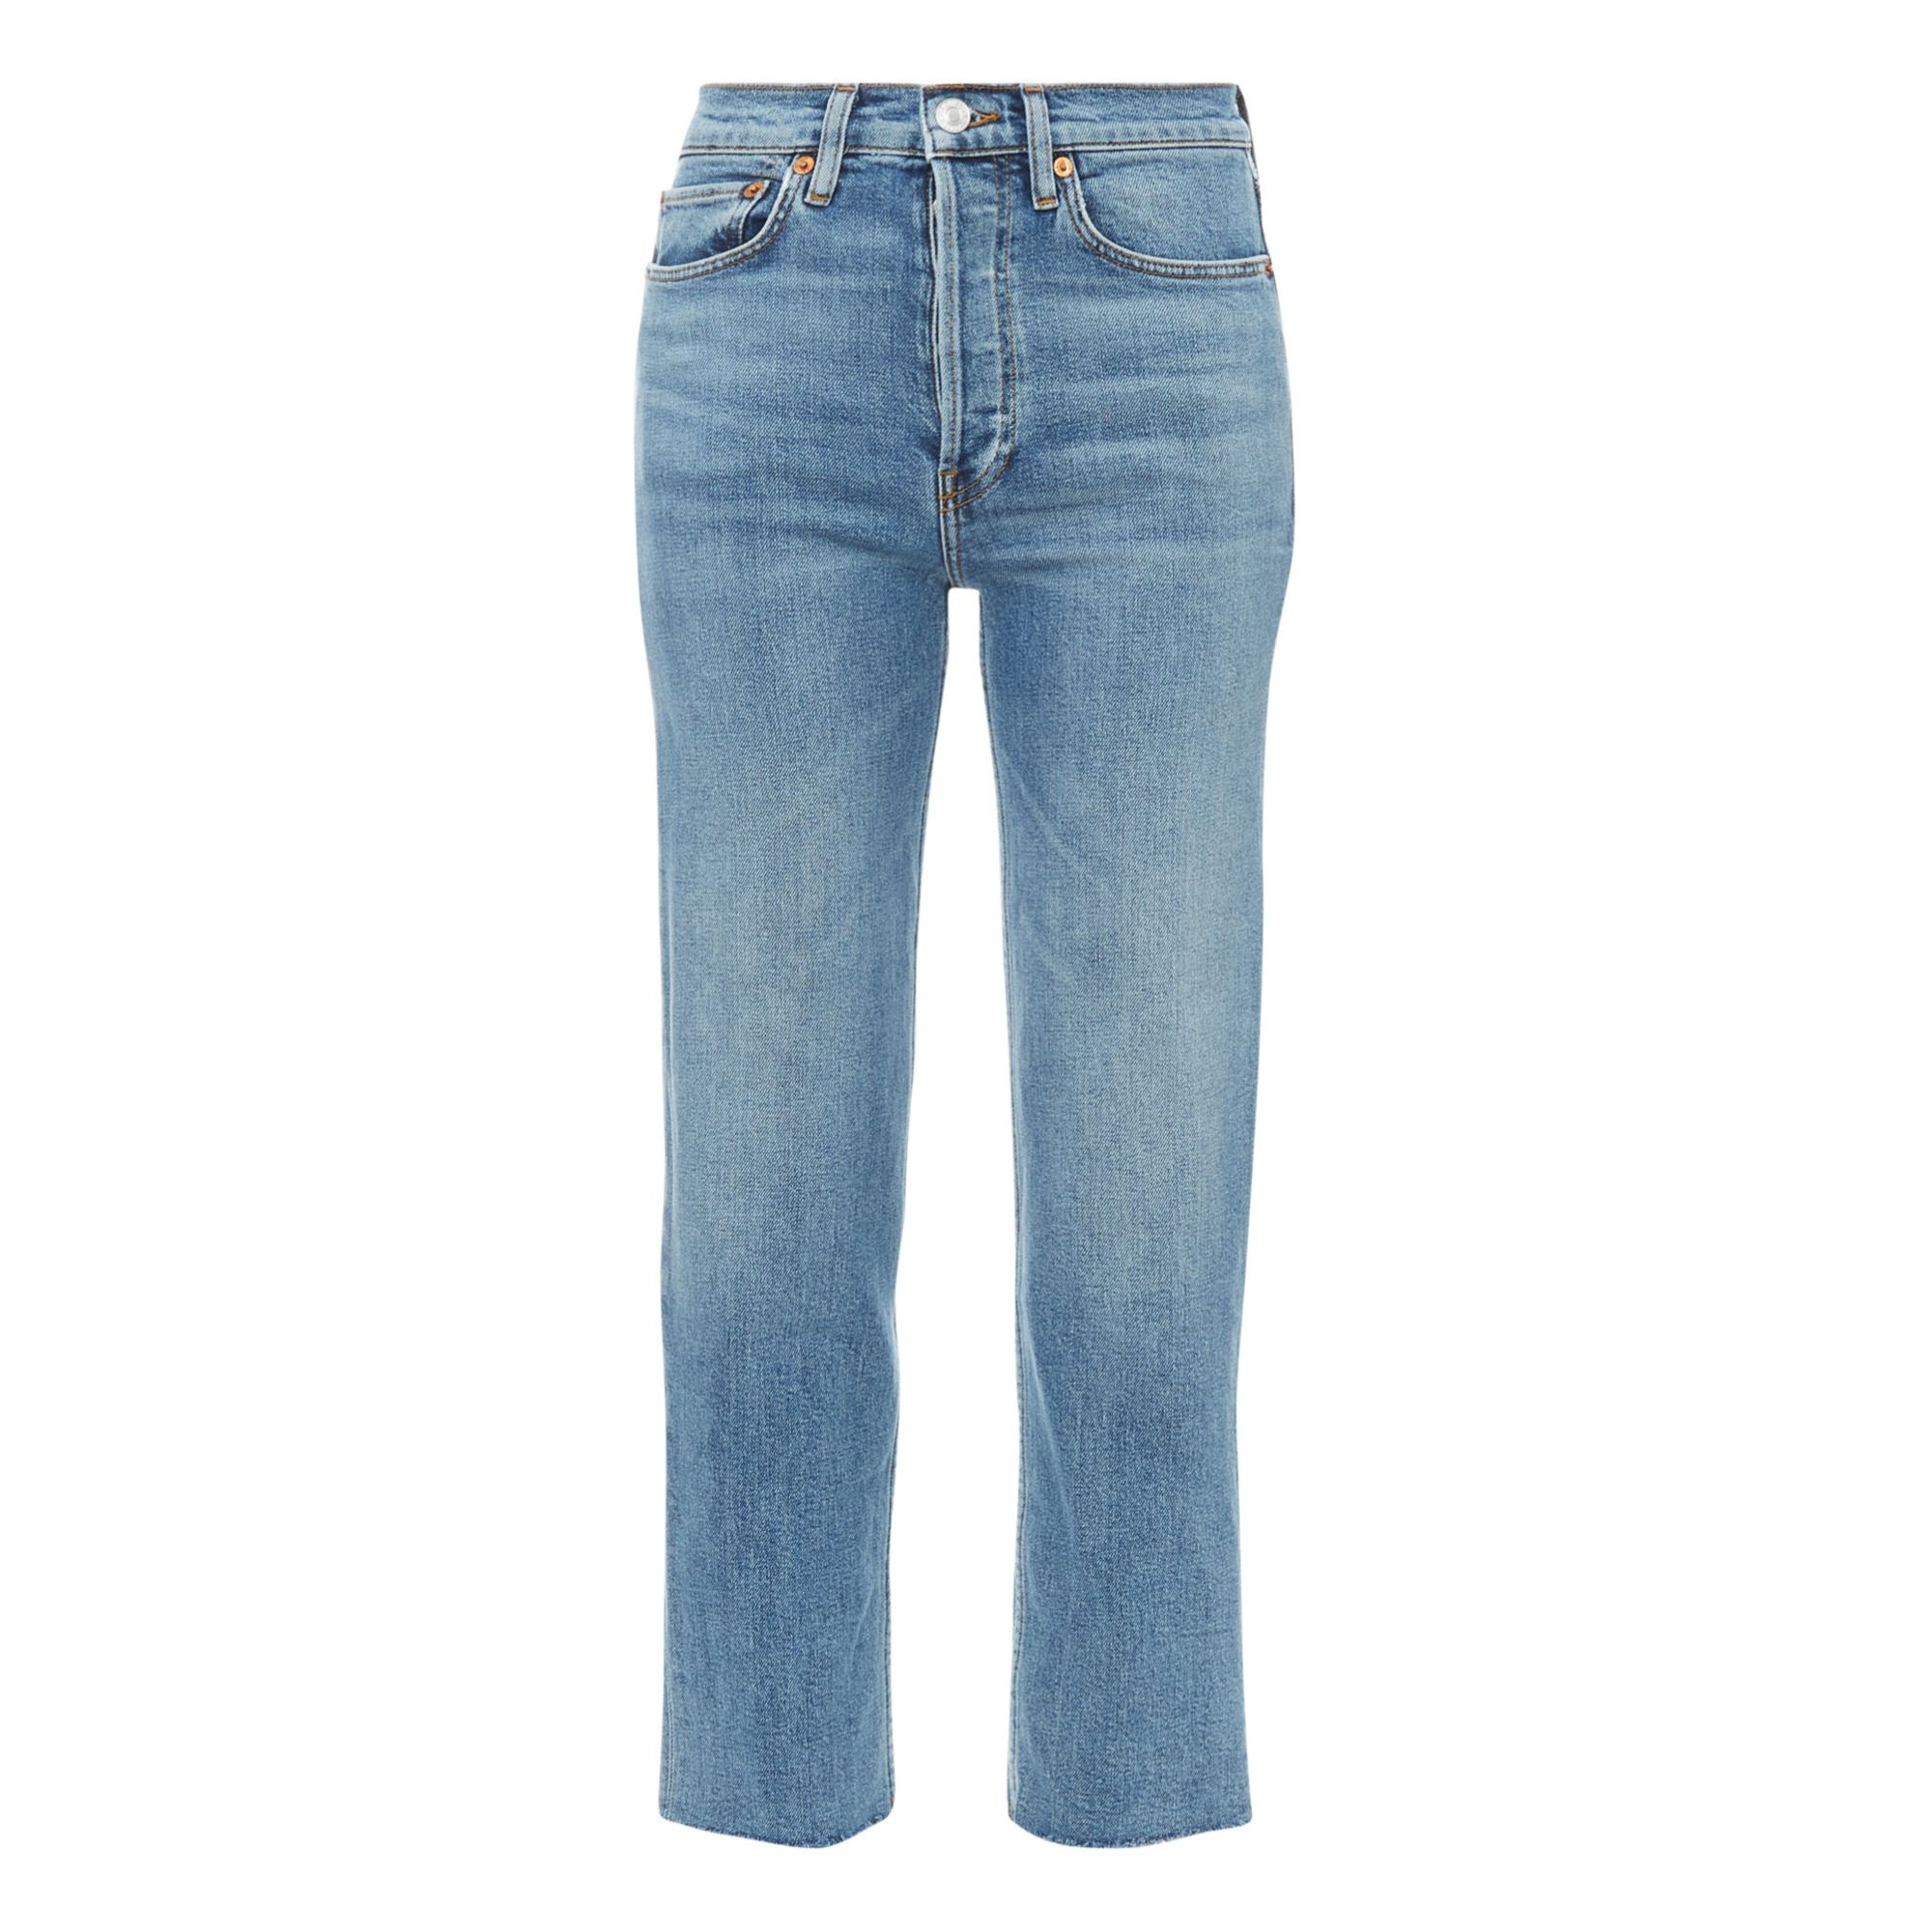 RE/DONE Denim 70s Stove Pipe Jeans in Blau Damen Bekleidung Jeans Jeans mit gerader Passform 